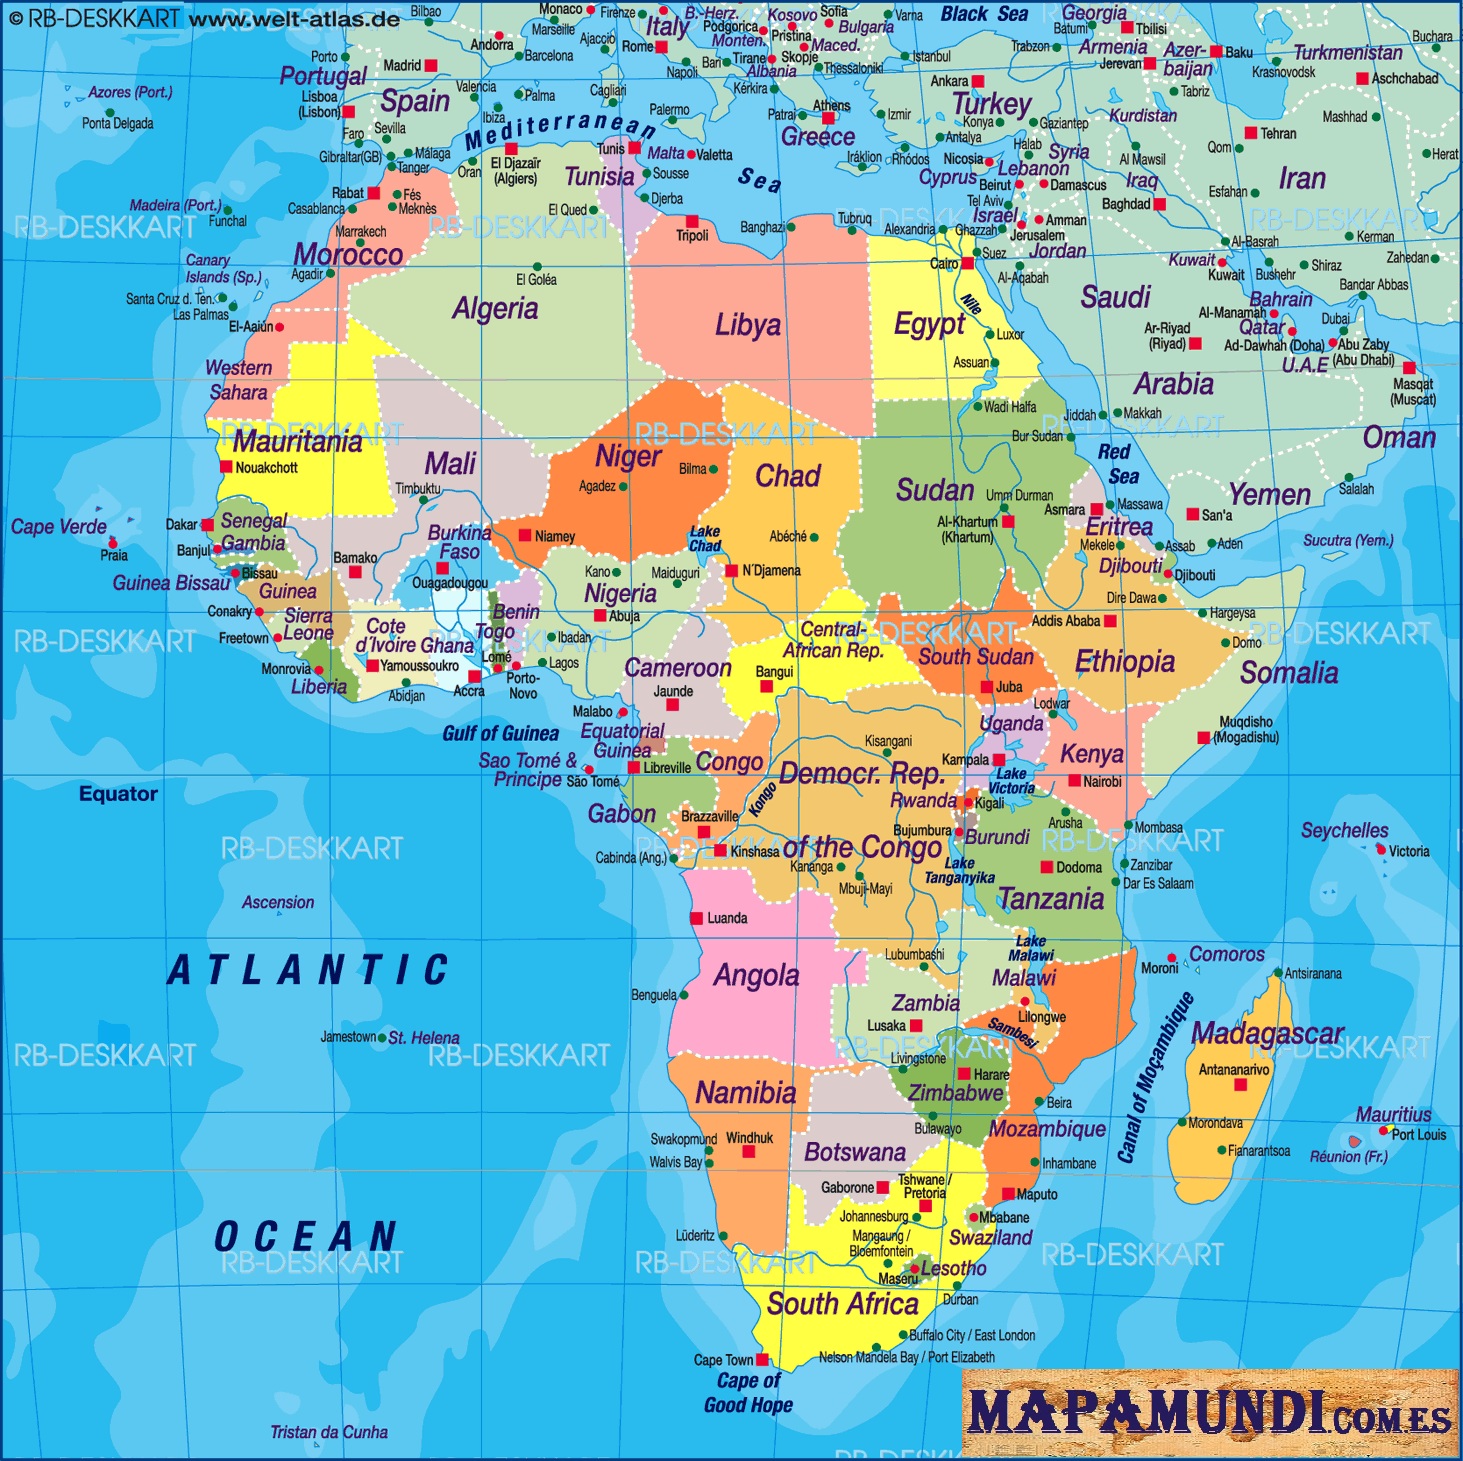 mapamundi | mapas del mundo y mucho más.: Mapamundi: Mapa de África